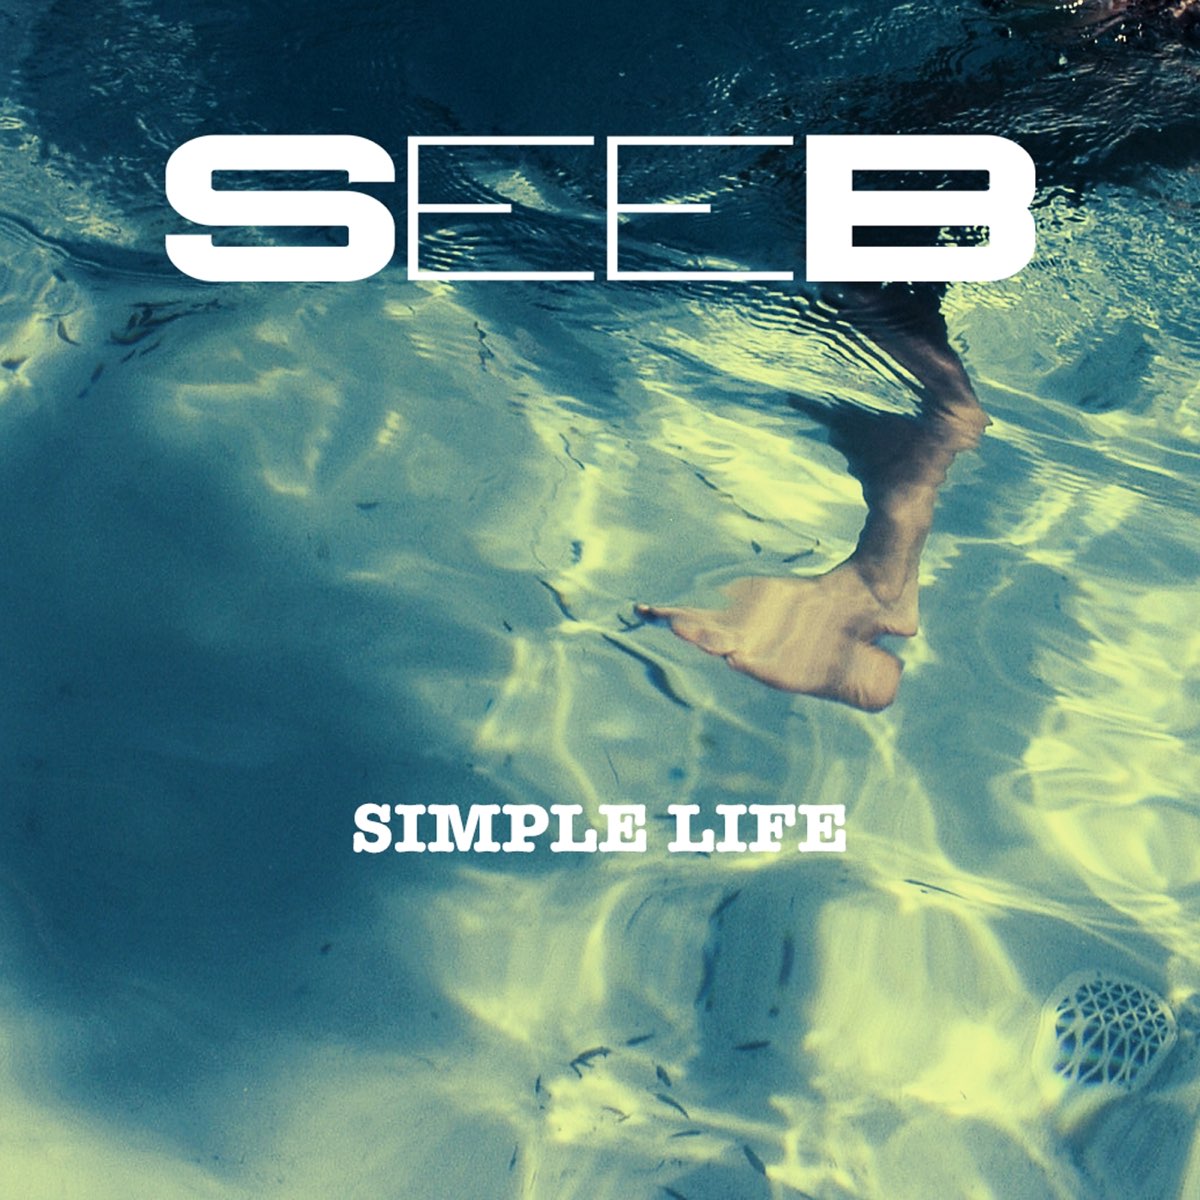 Simple обложка. Seeb. Simple Life. Seeb Breathe фото. Simply life